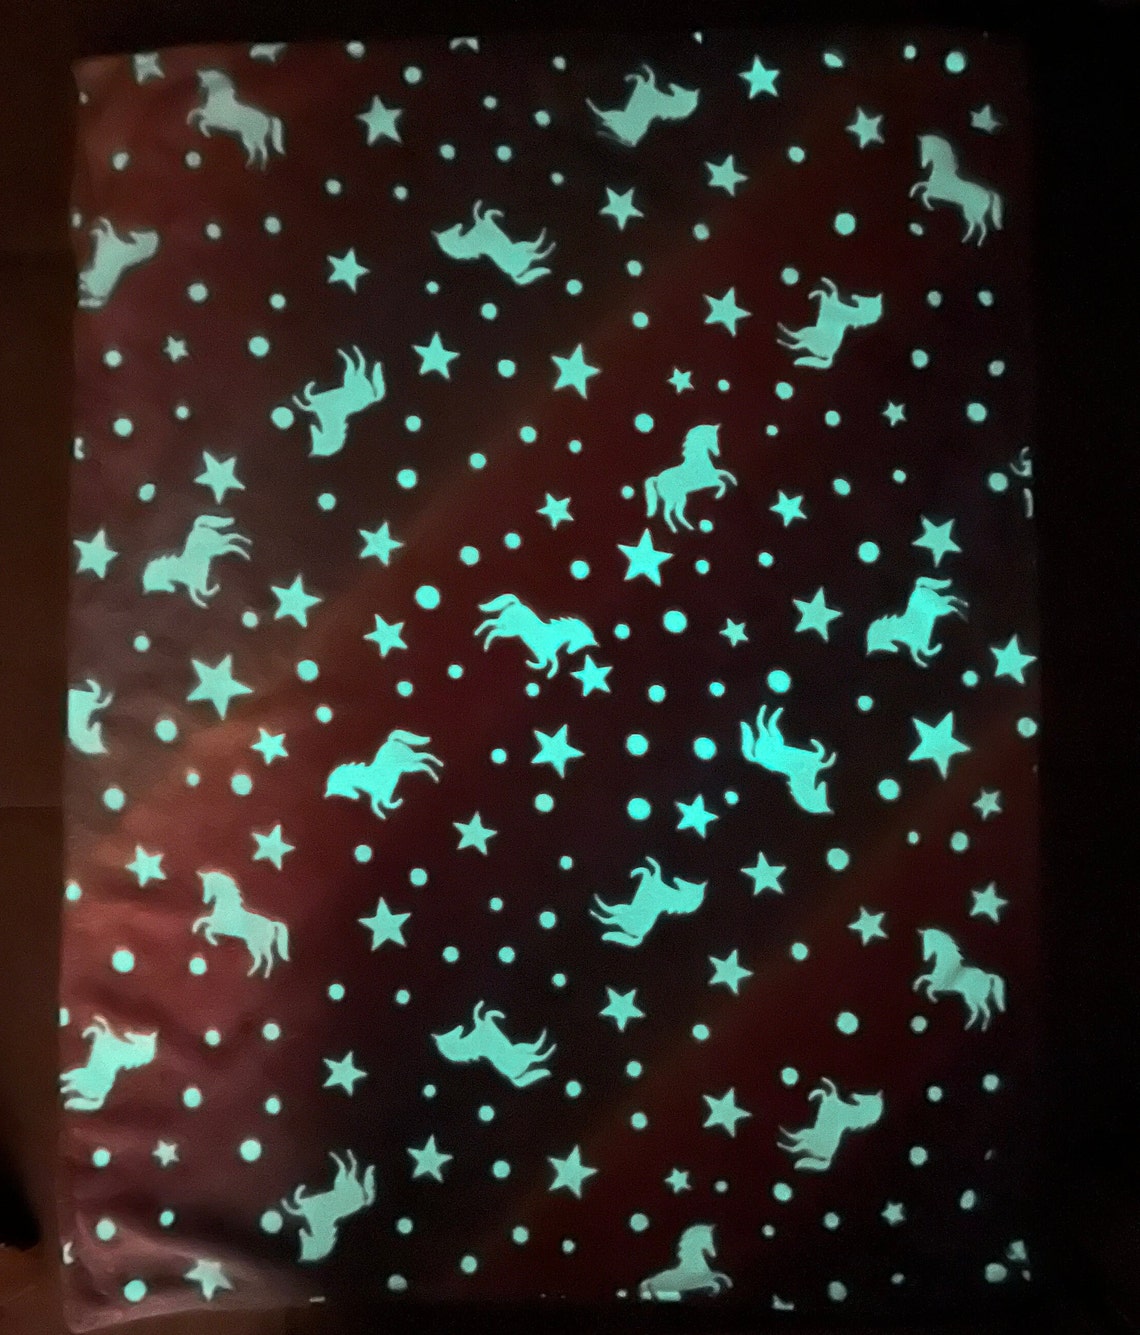 Glowing Blanket Fluorescent patterns magic blanket for kids image 1